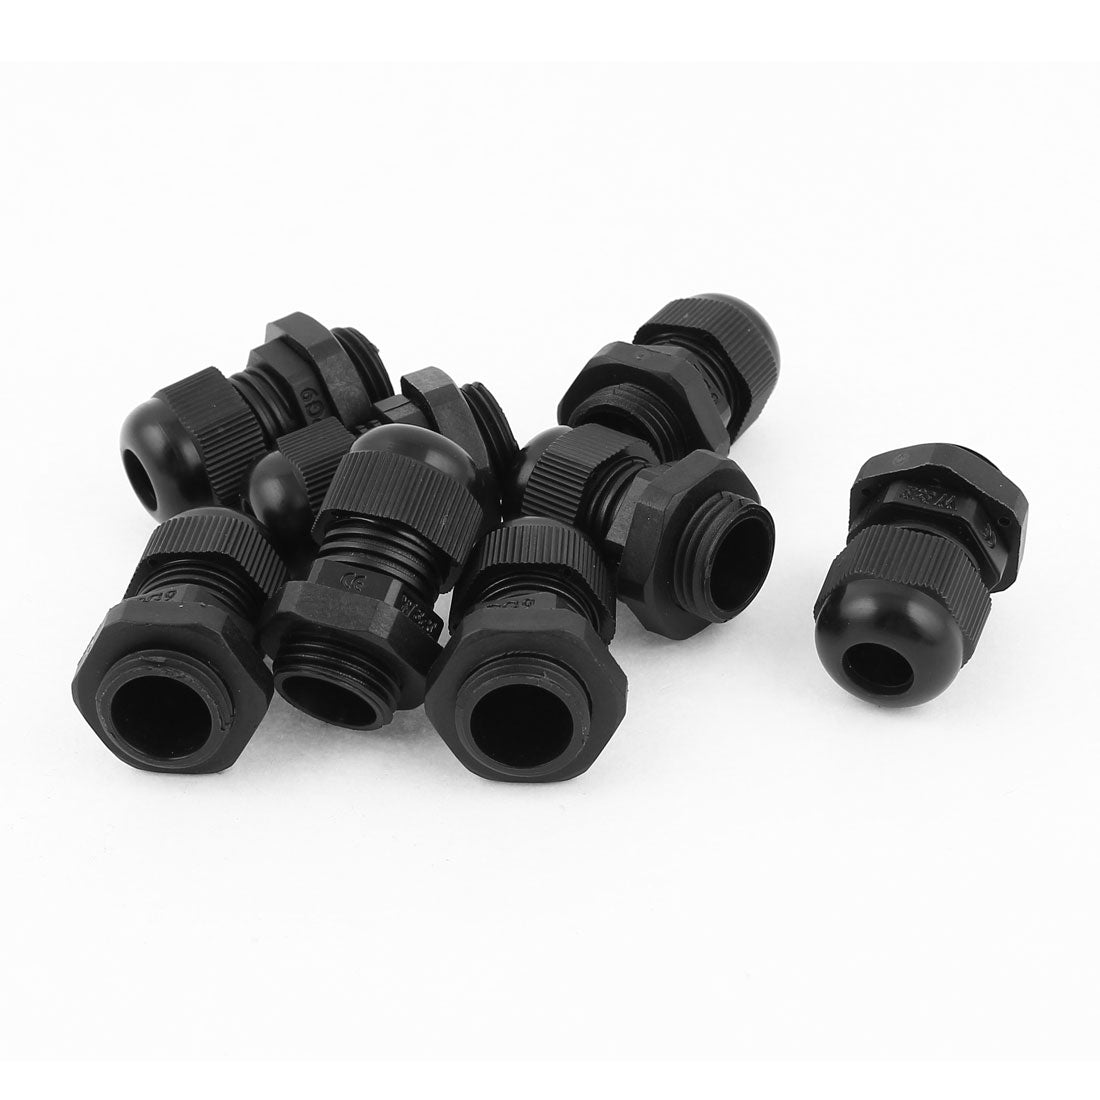 uxcell Uxcell 10 Pcs PG9 Black Plastic 4-8mm Dia Waterproof Cable Glands Connectors